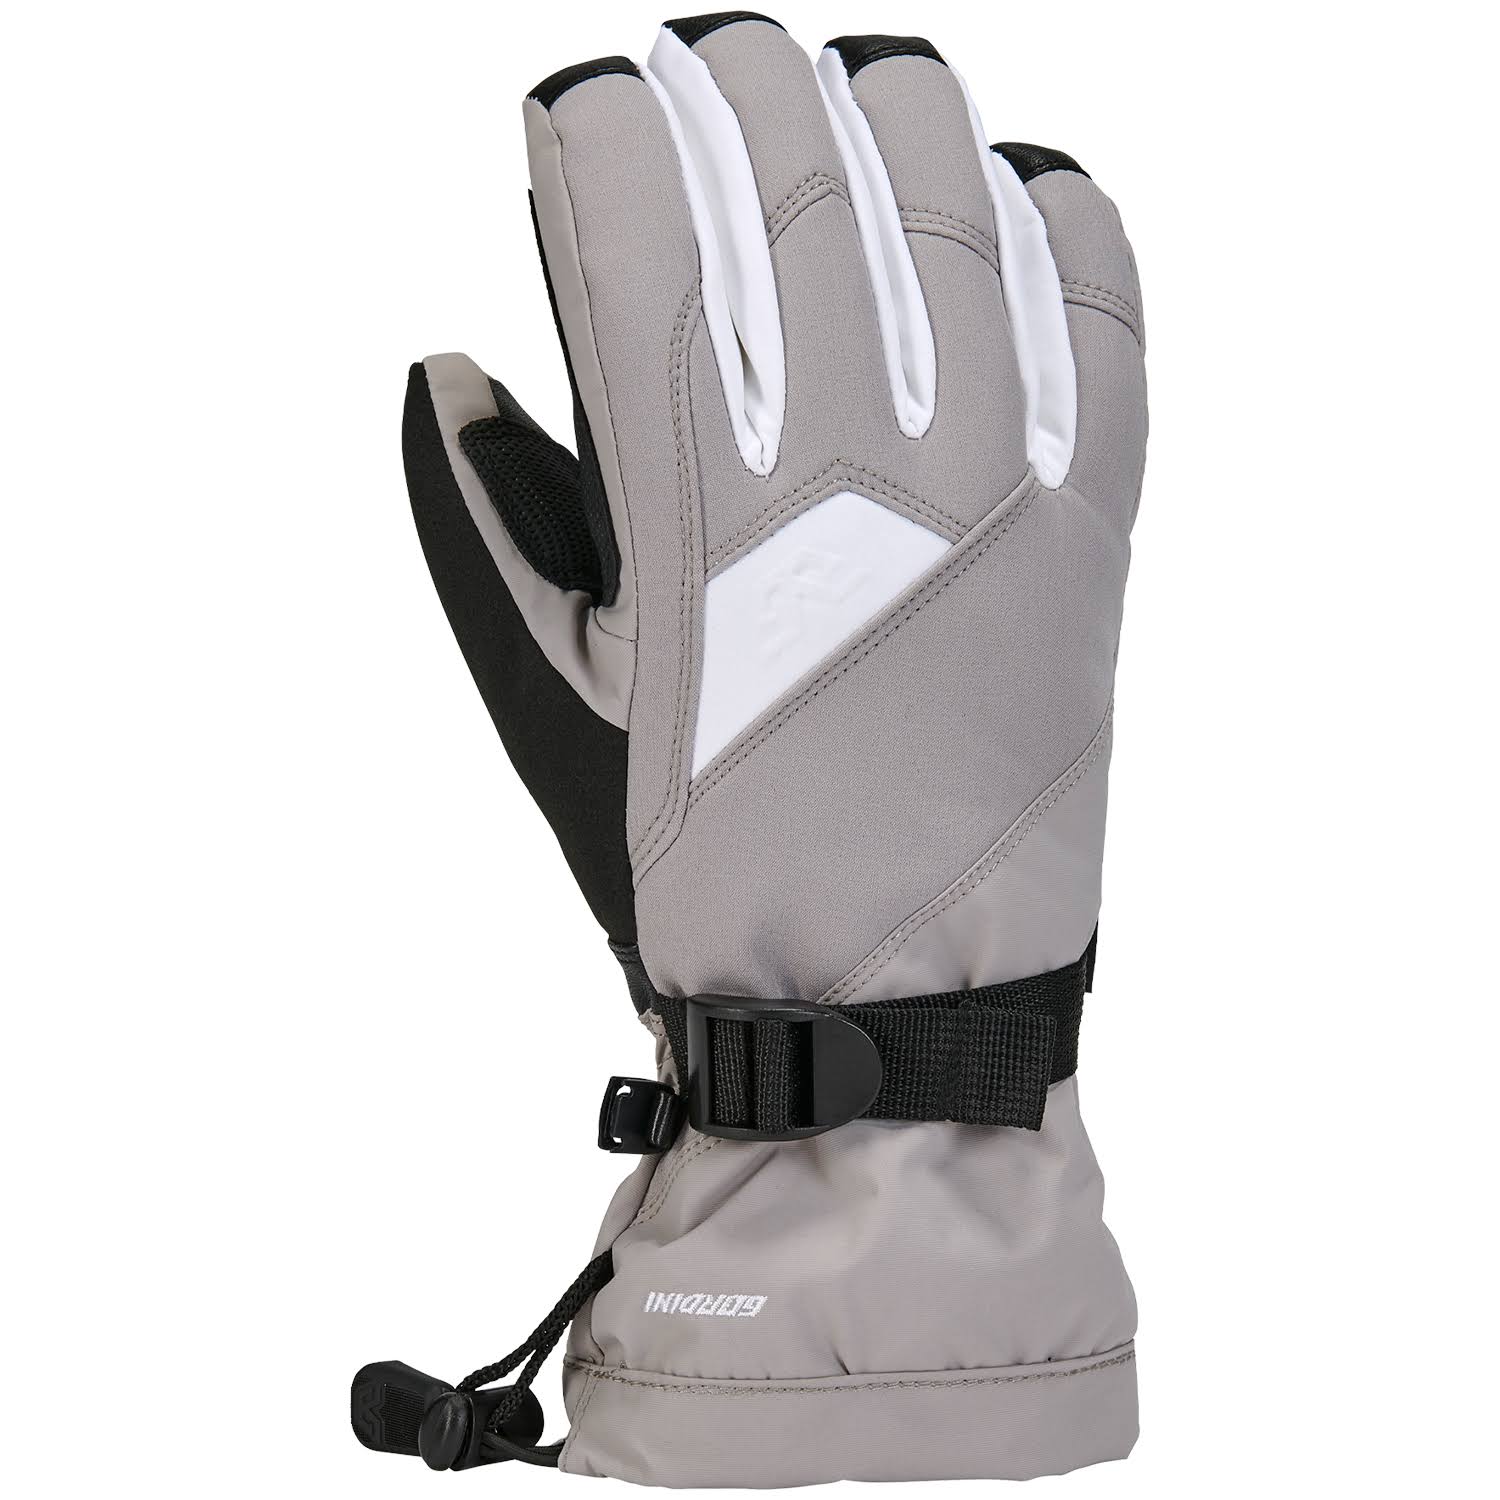 Gordini Aquabloc Down Gauntlet Glove - Women's